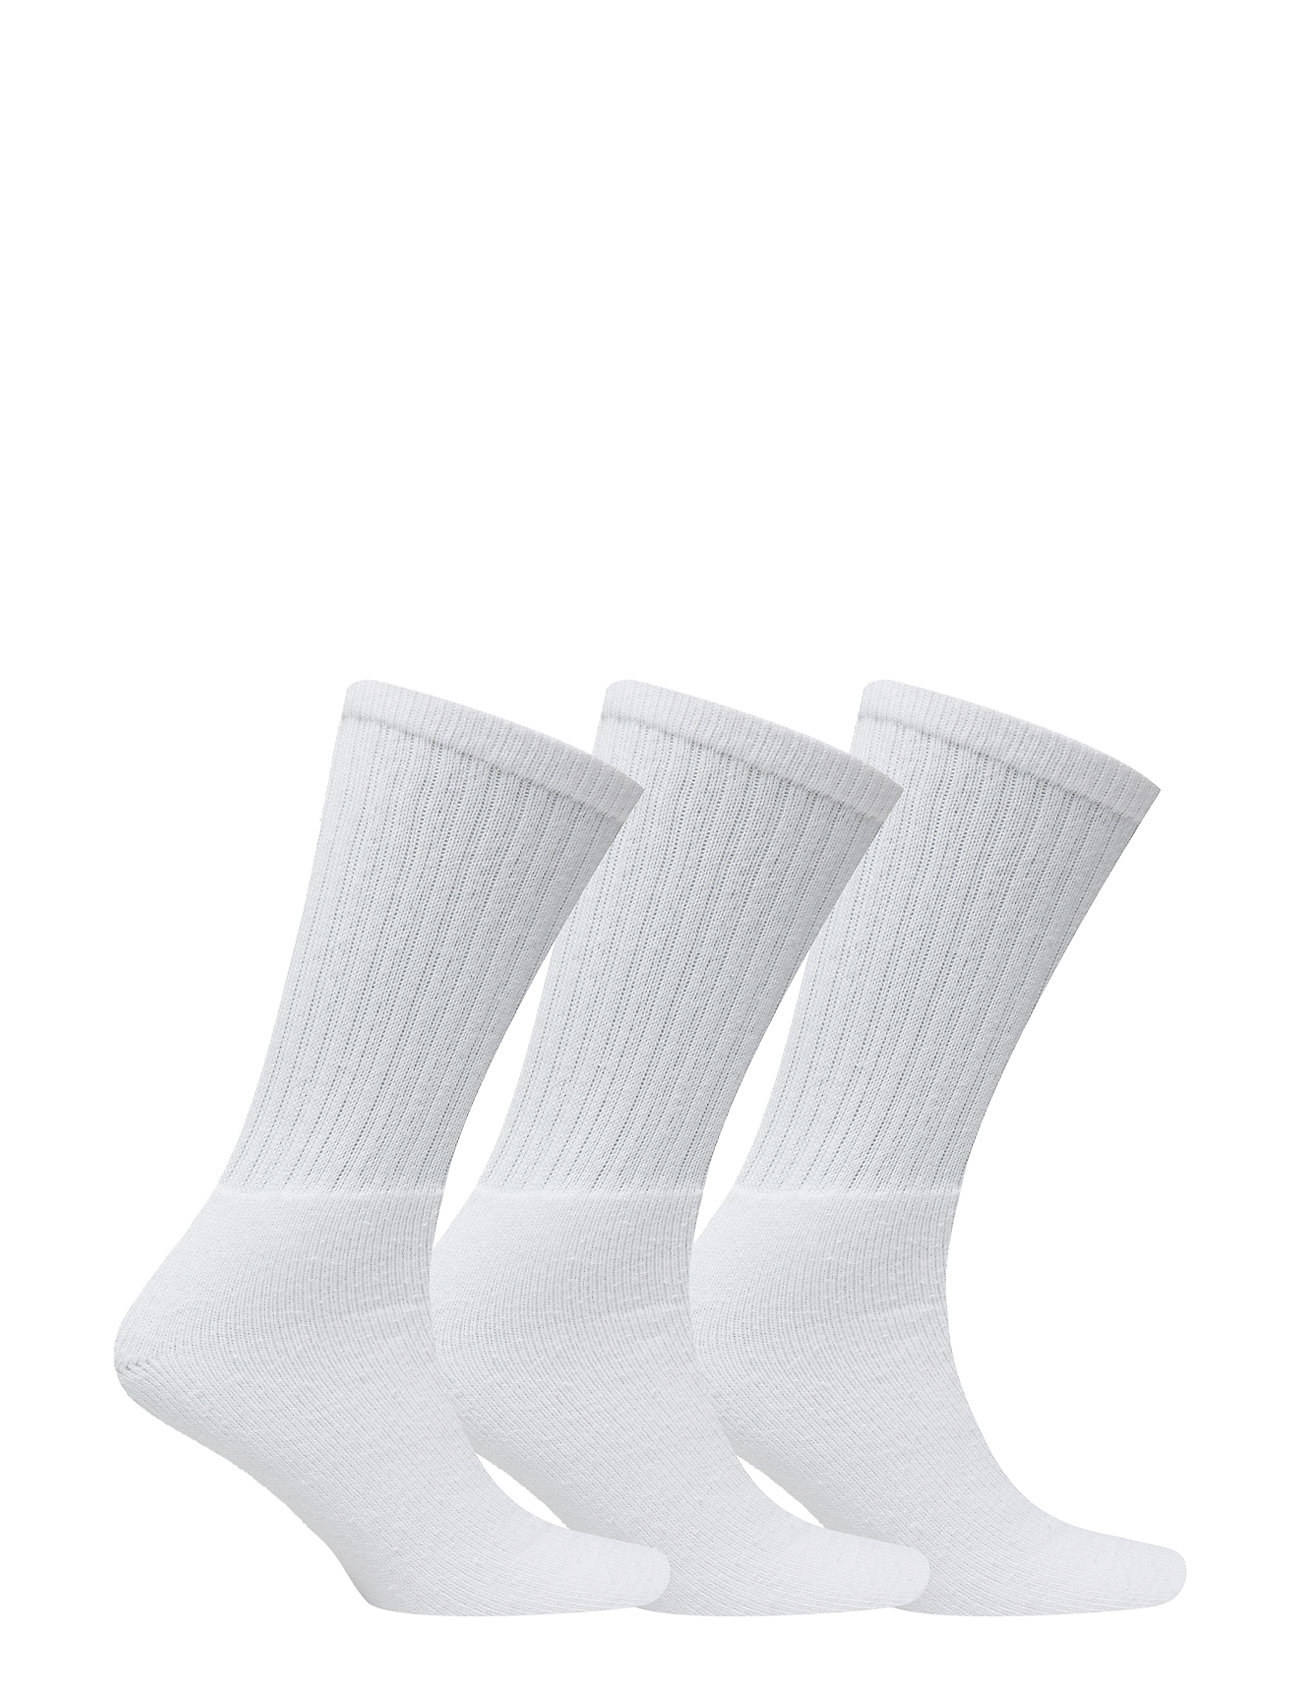 Claudio - Claudio socks tennis 3-pack - skarpetki w wielopaku - white - 1